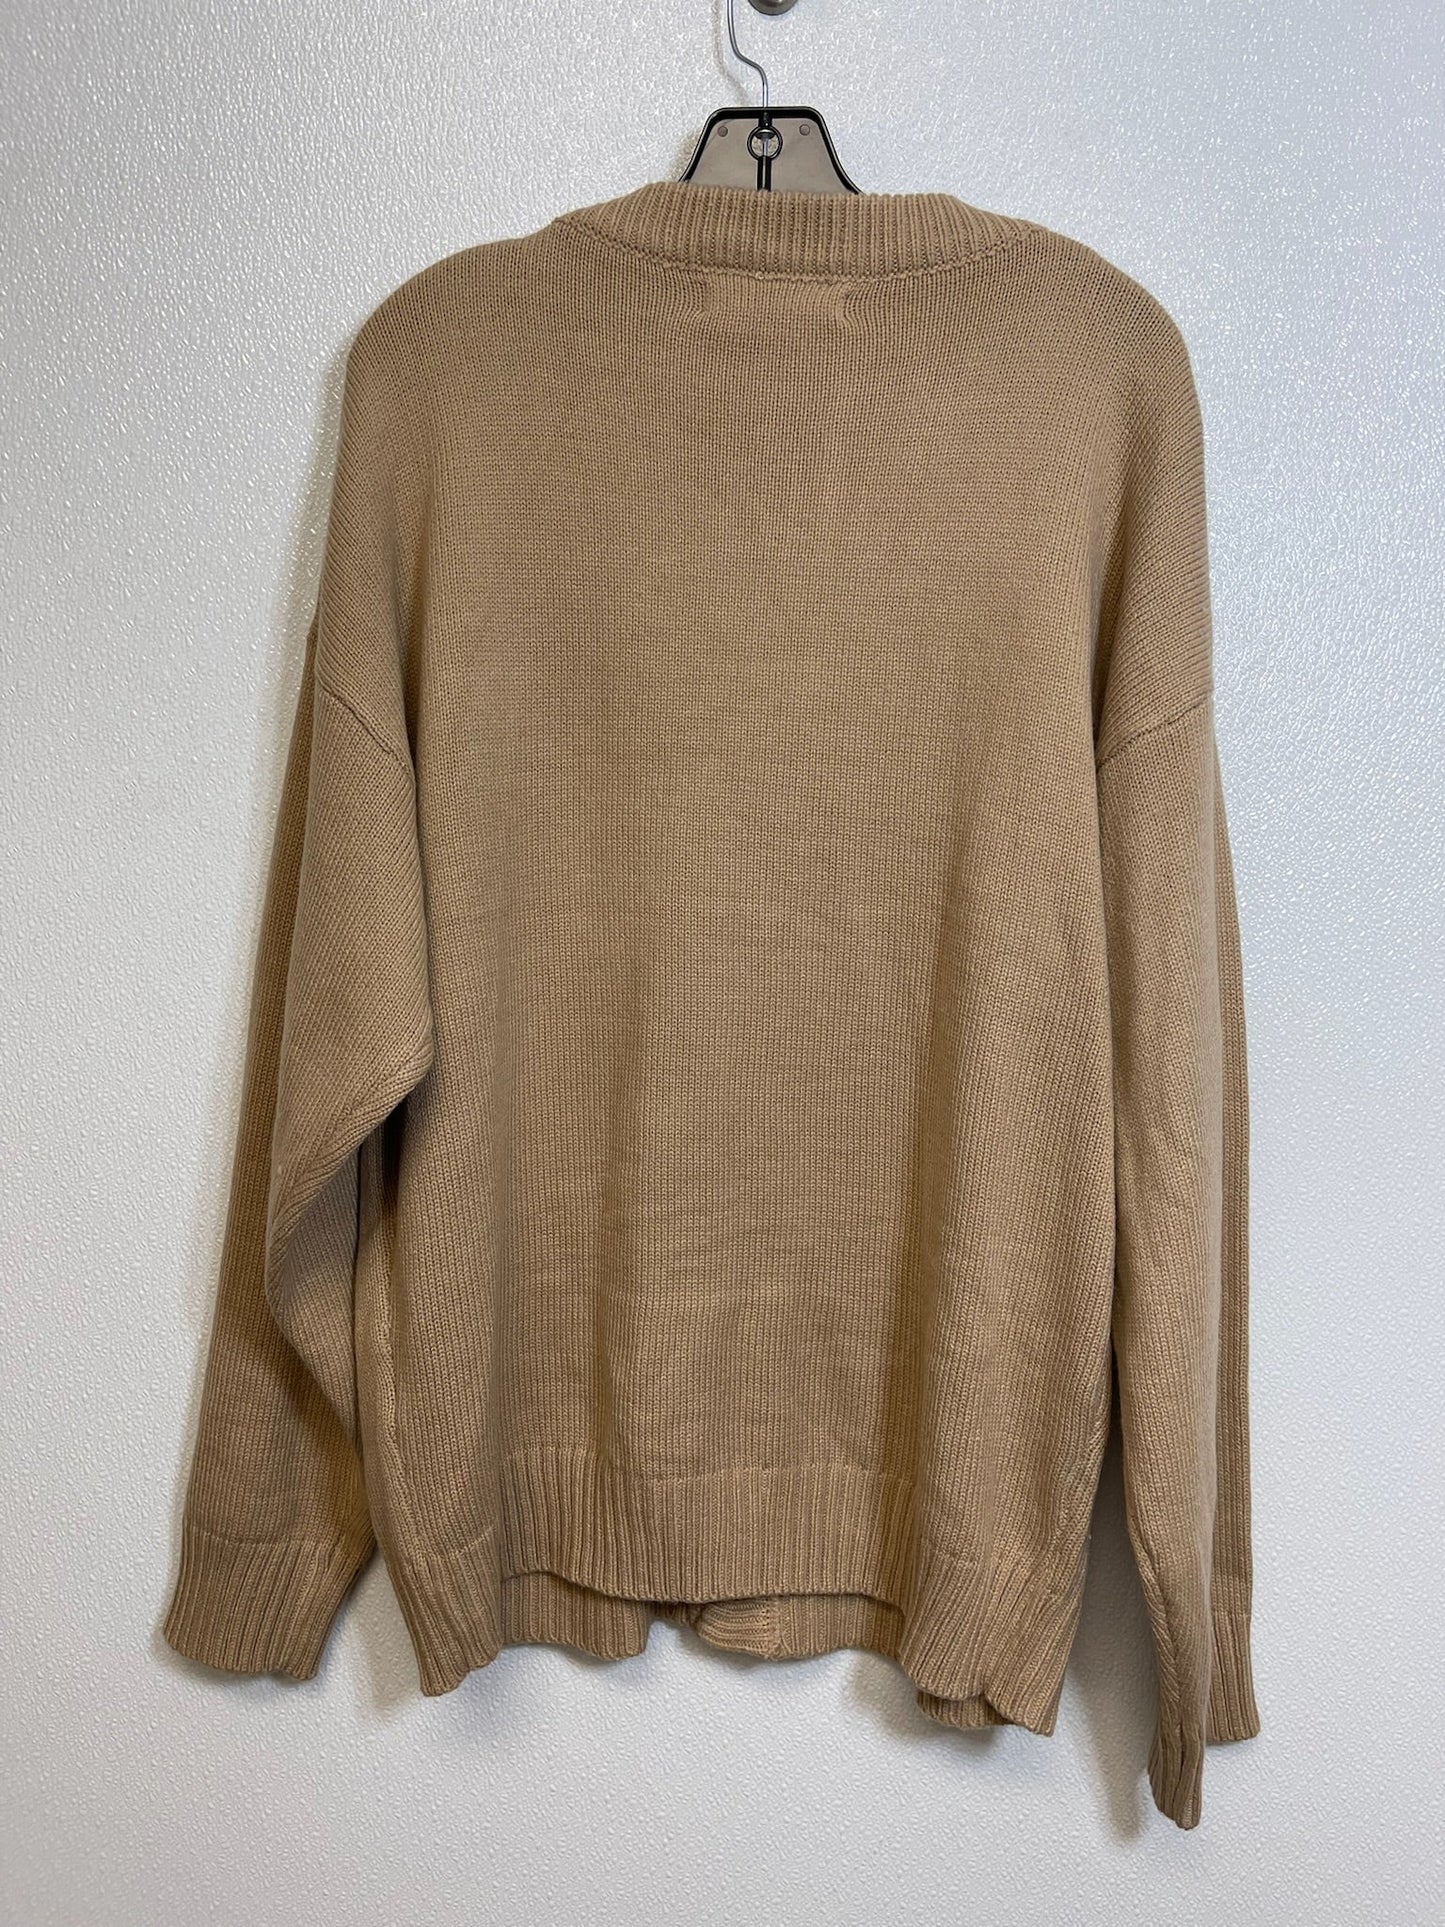 Tan Sweater Cardigan Clothes Mentor, Size M